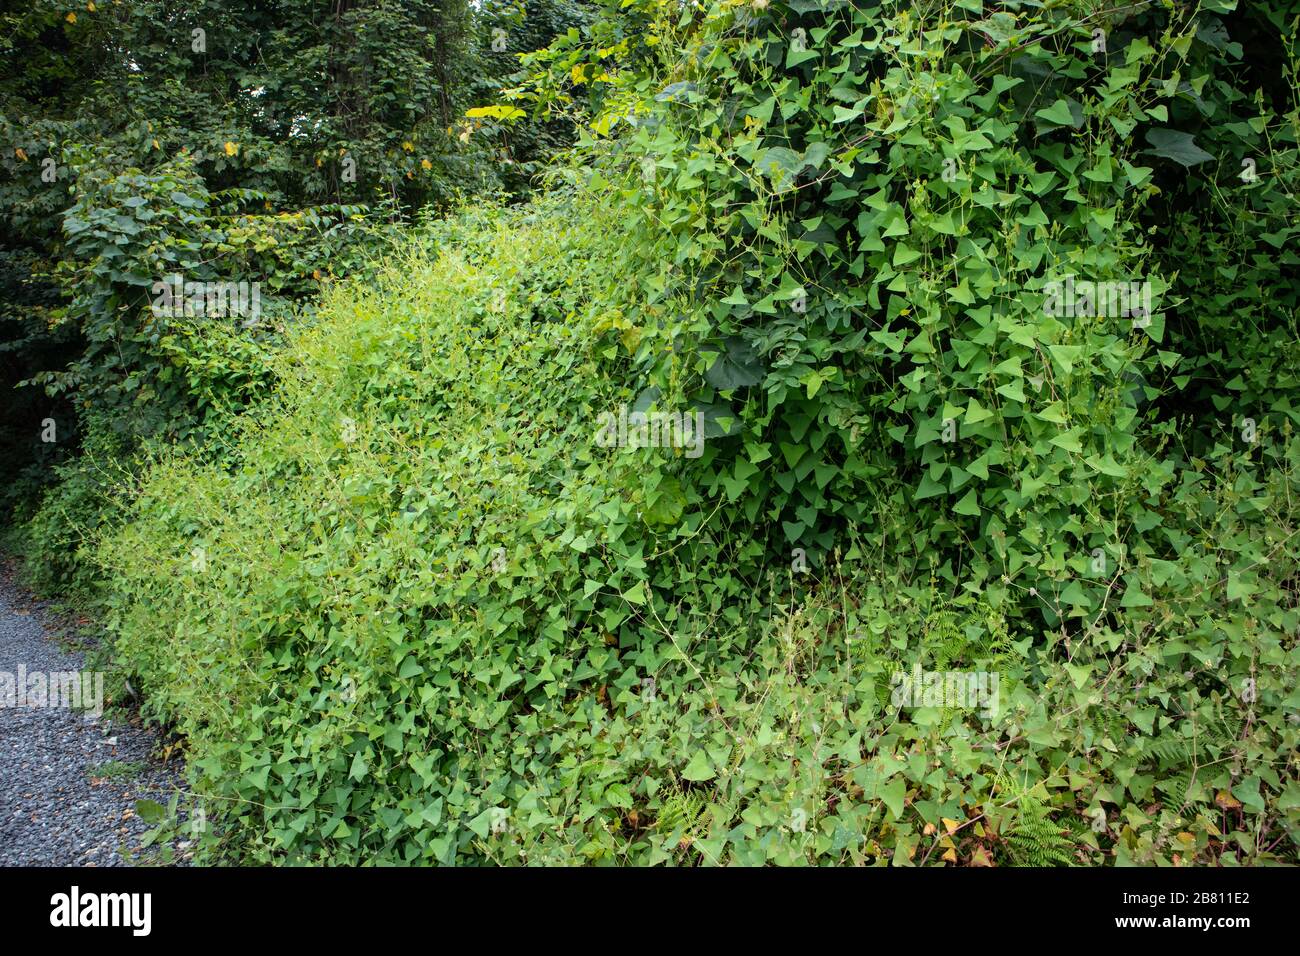 Mile-a-minute weed - Persicaria perfoliata Stock Photo